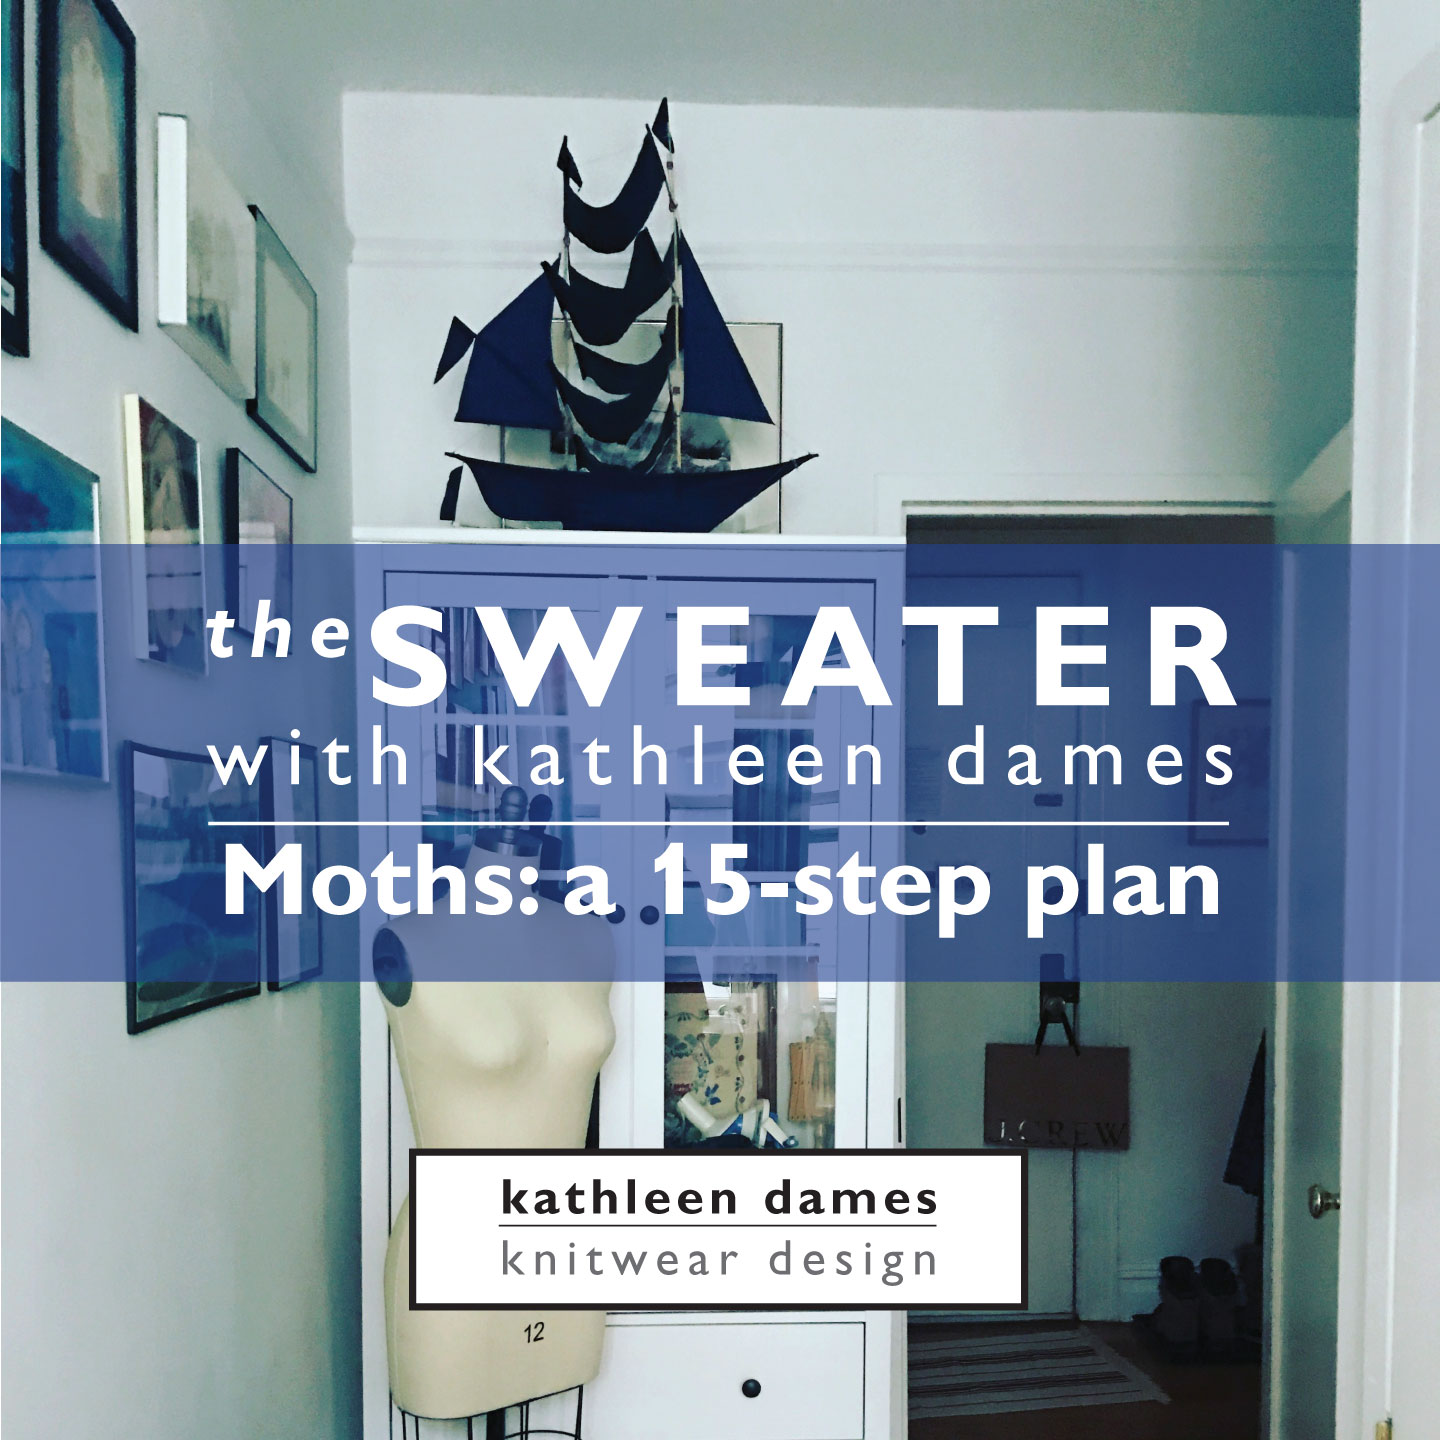 kathleen dames Moths a 15step plan (ugh, why so many?!)